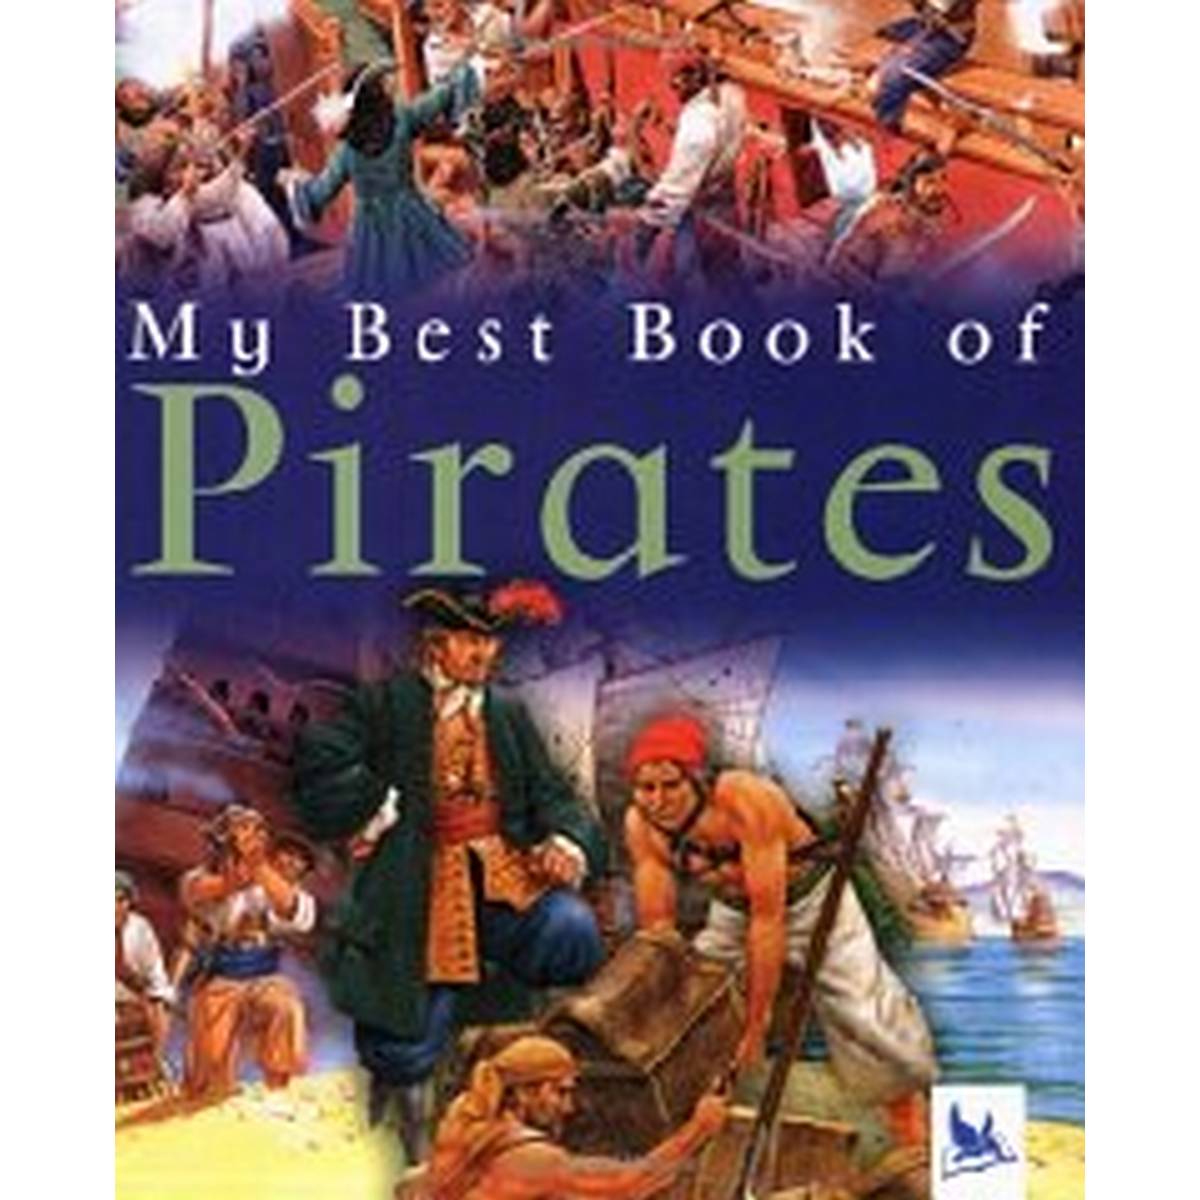 My Best Book of Pirates